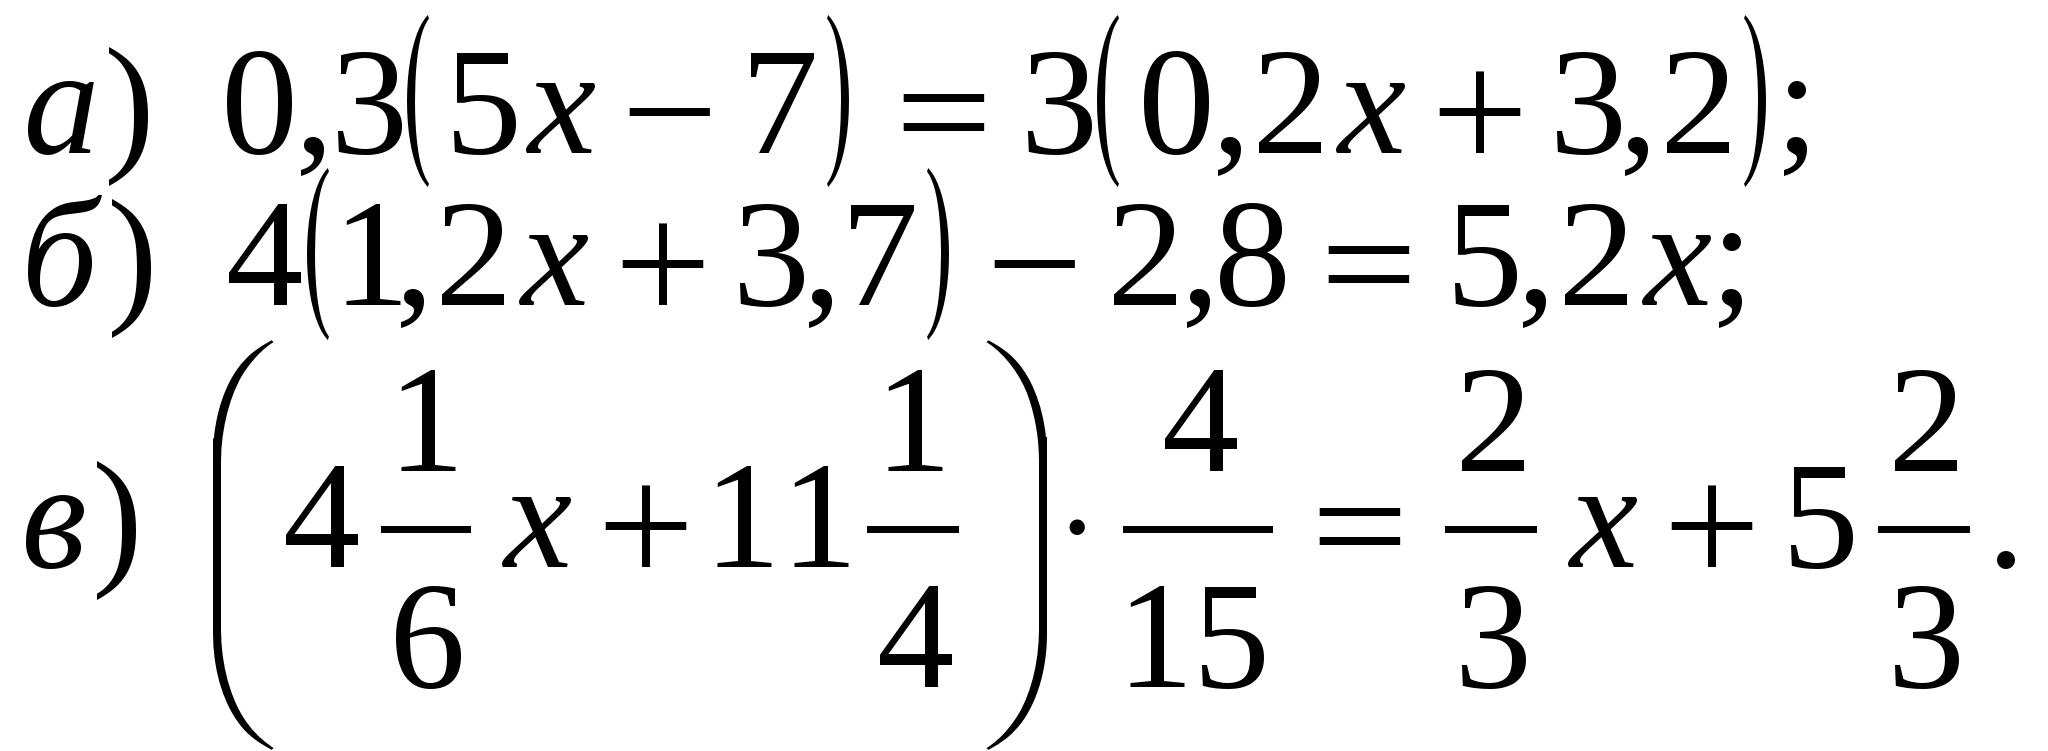 Решение уравнений 6 класс математика калькулятор. Сложные уравнения 6 класс. 6 Класс математика уравнения сложные. Уравнения 6 класс по математике. Математика 6 класс уравнения.